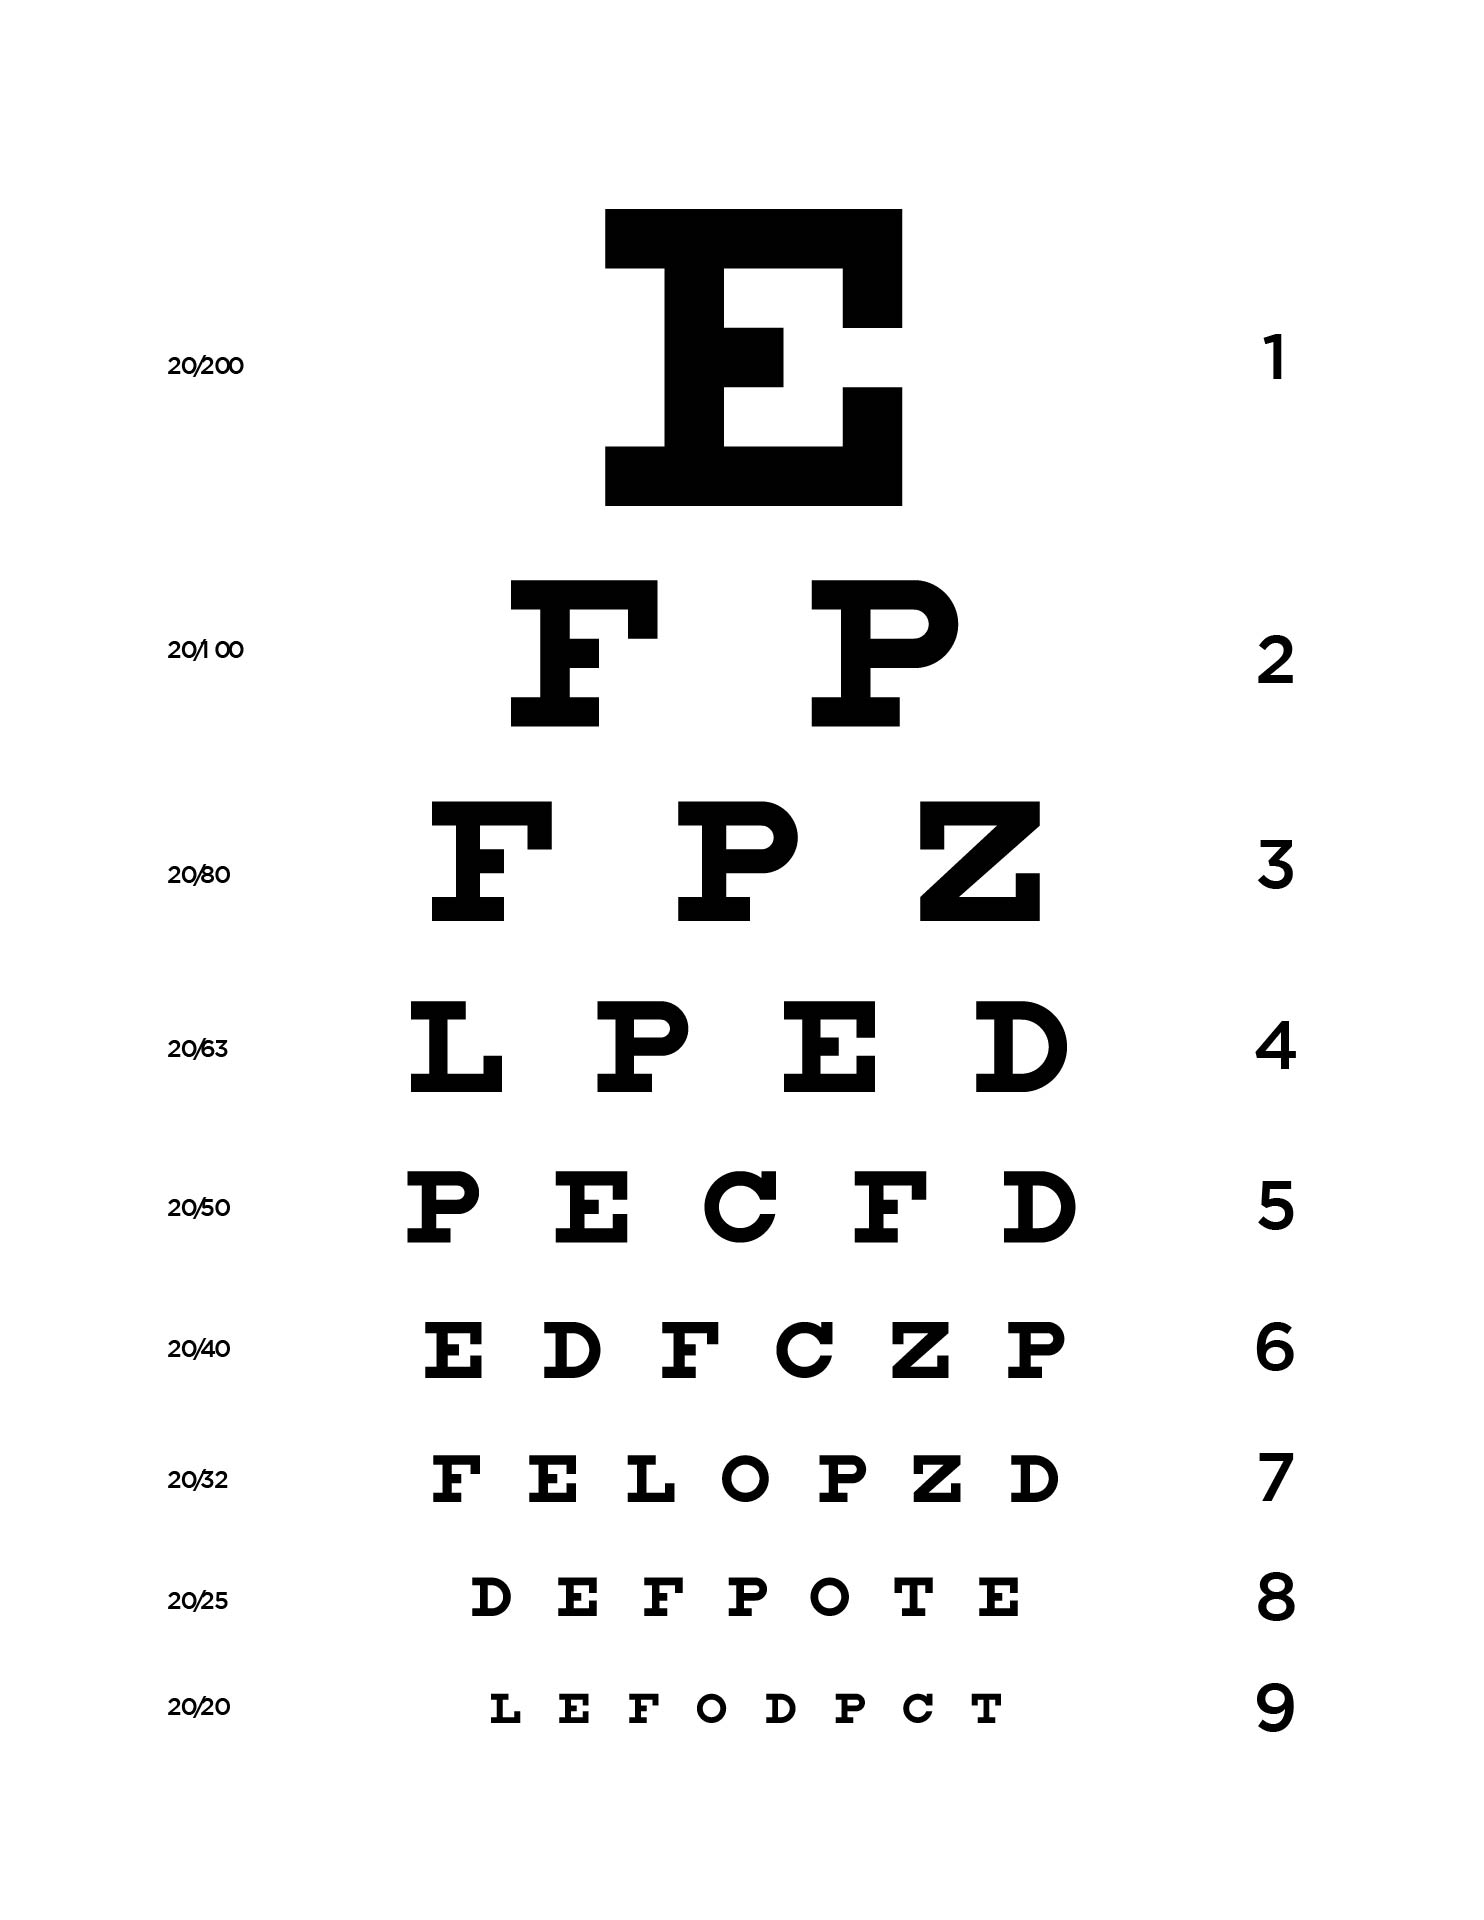 7 Best Images Of Snellen Eye Chart Printable Printable Snellen Eye